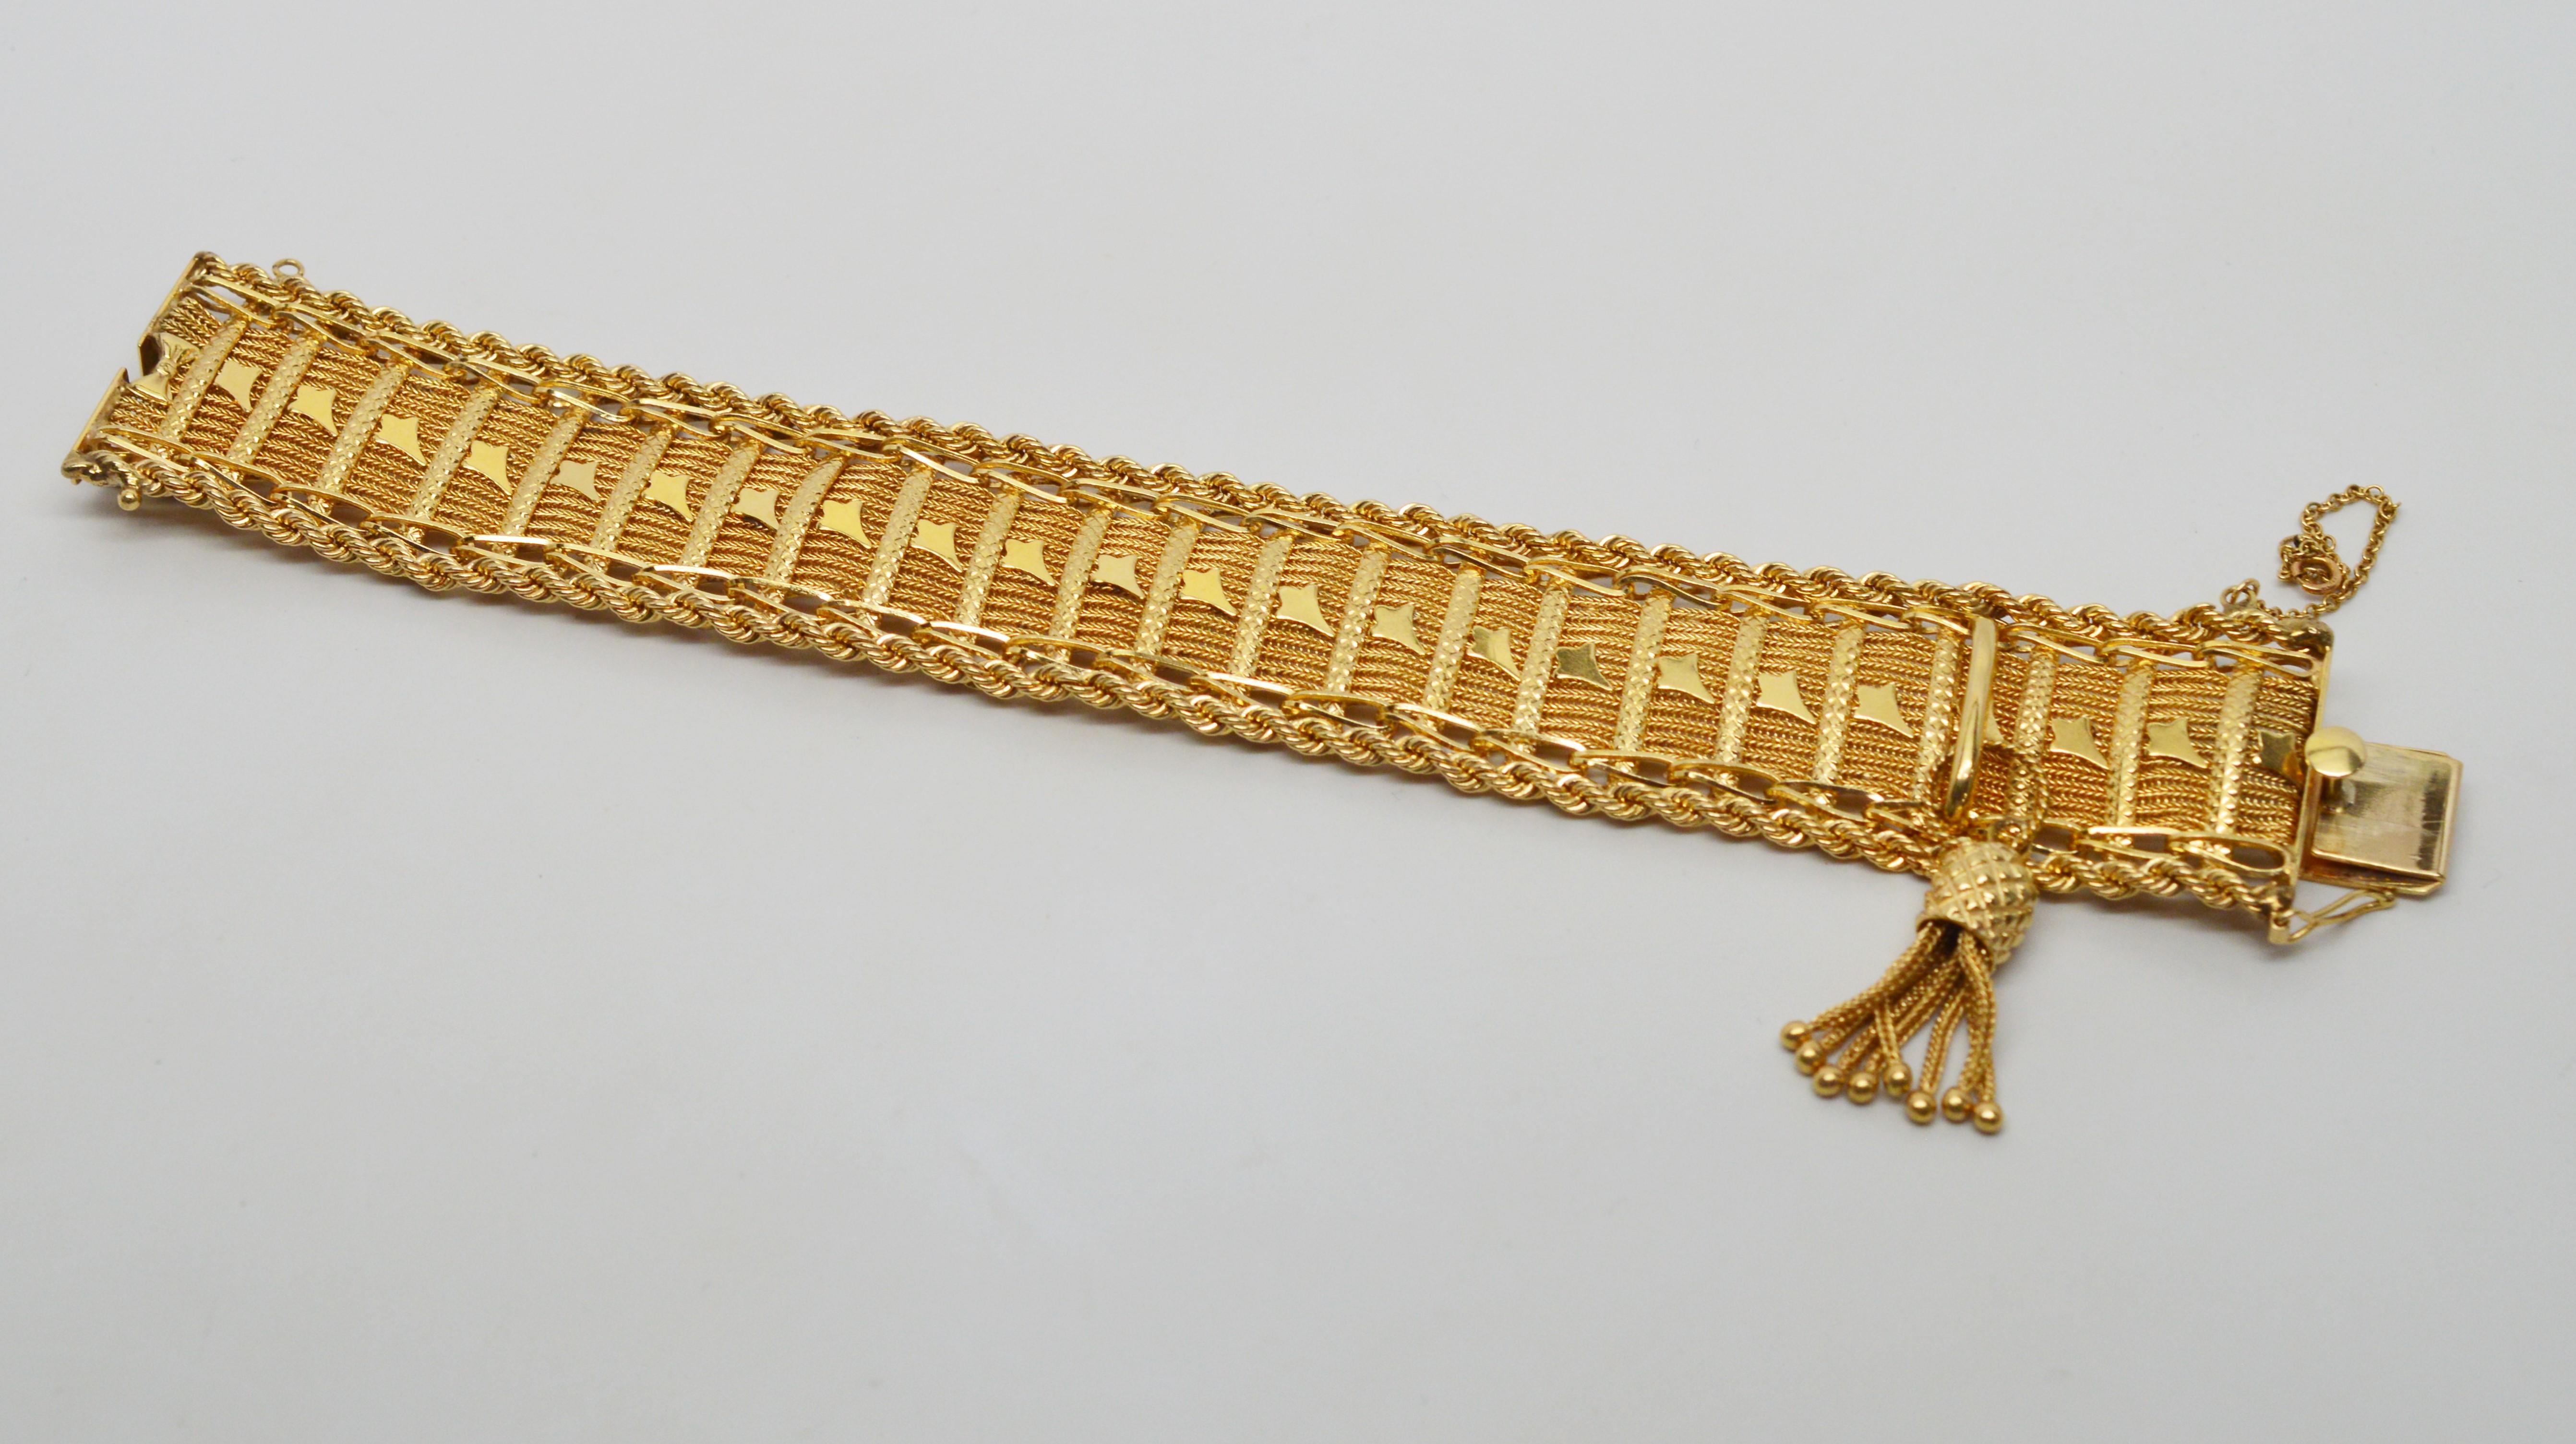  14 Karat Yellow Gold Rope Chain Mesh Bracelet with Charm Tassel 1